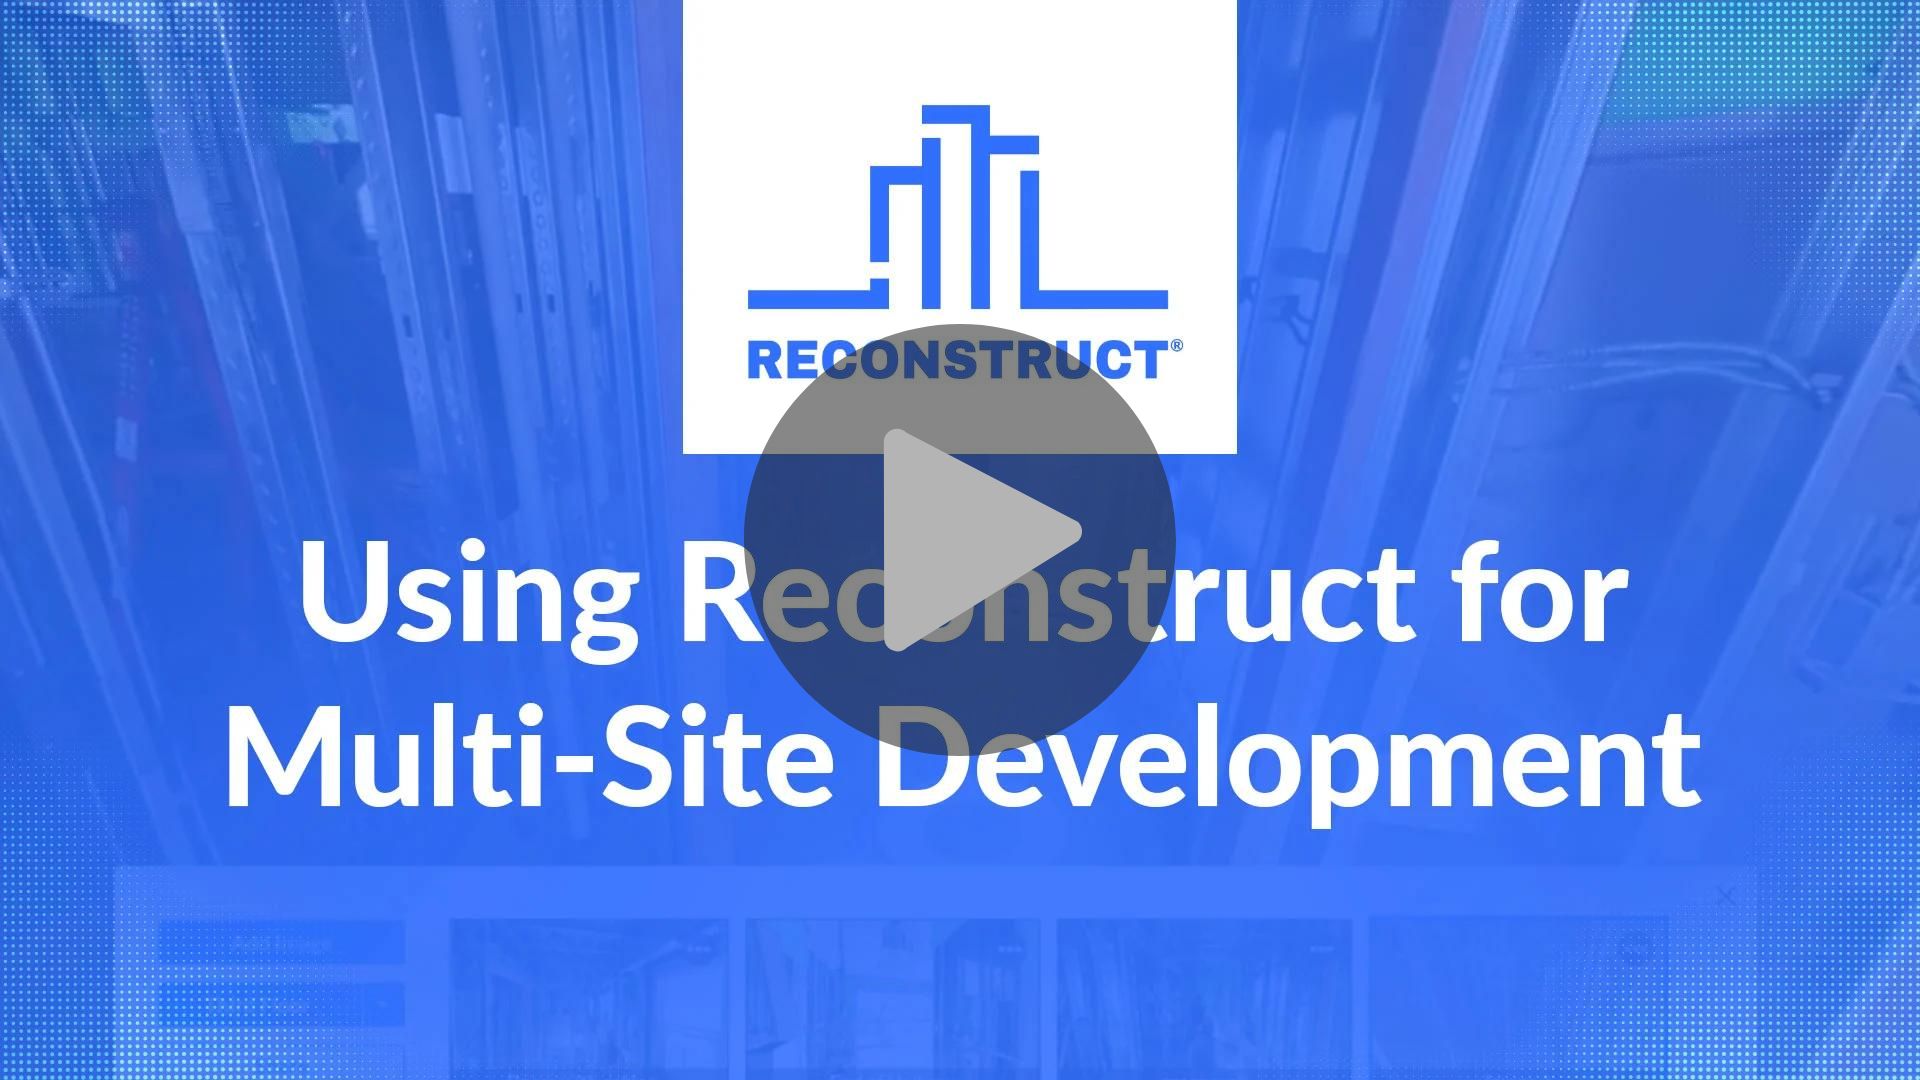 RI-Video-Using-Reconstruct-for-Multi-Site-Development-Thumbnail-Playbutton